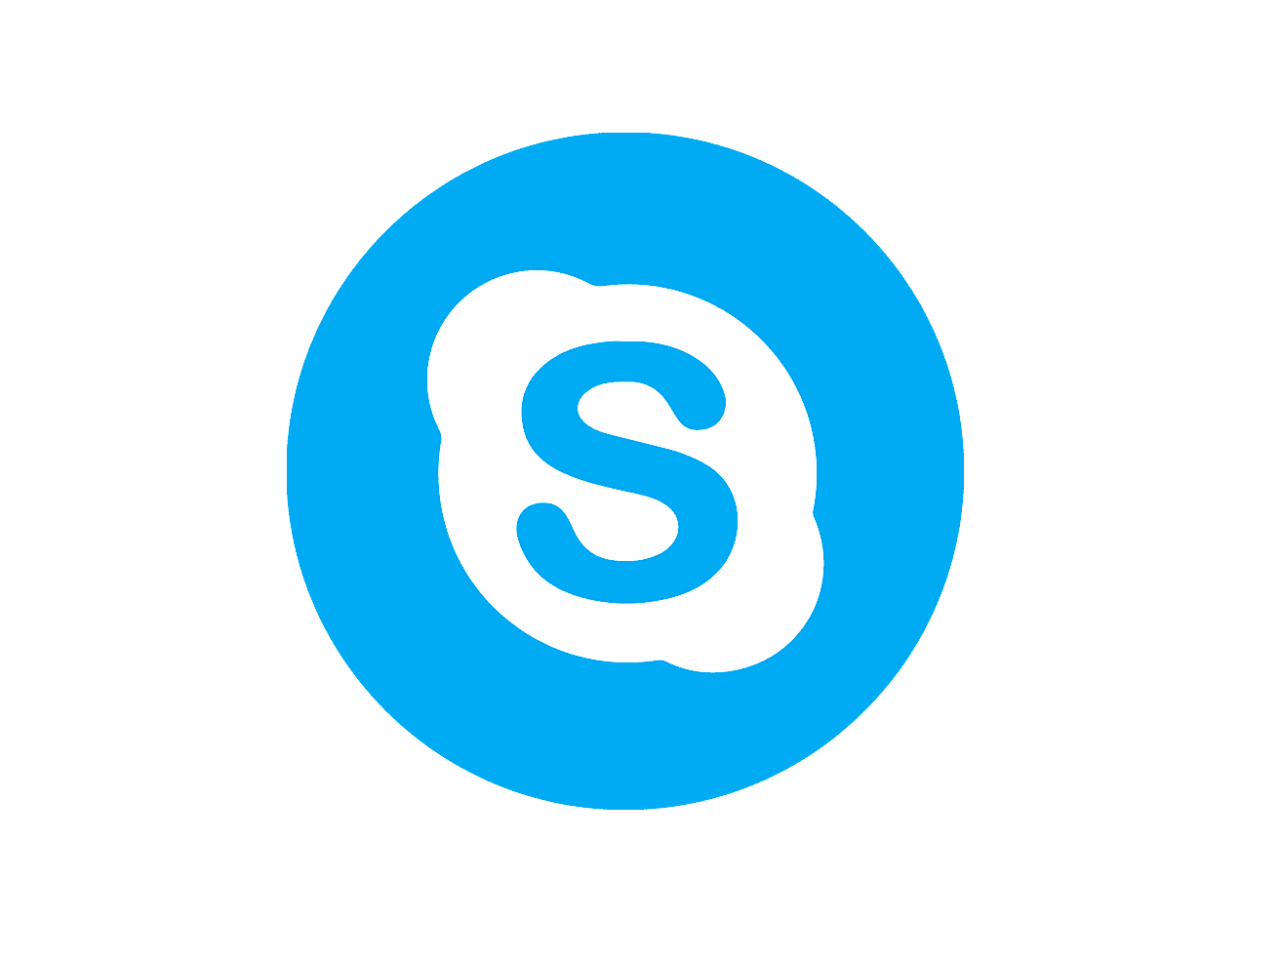 Consulti skype online